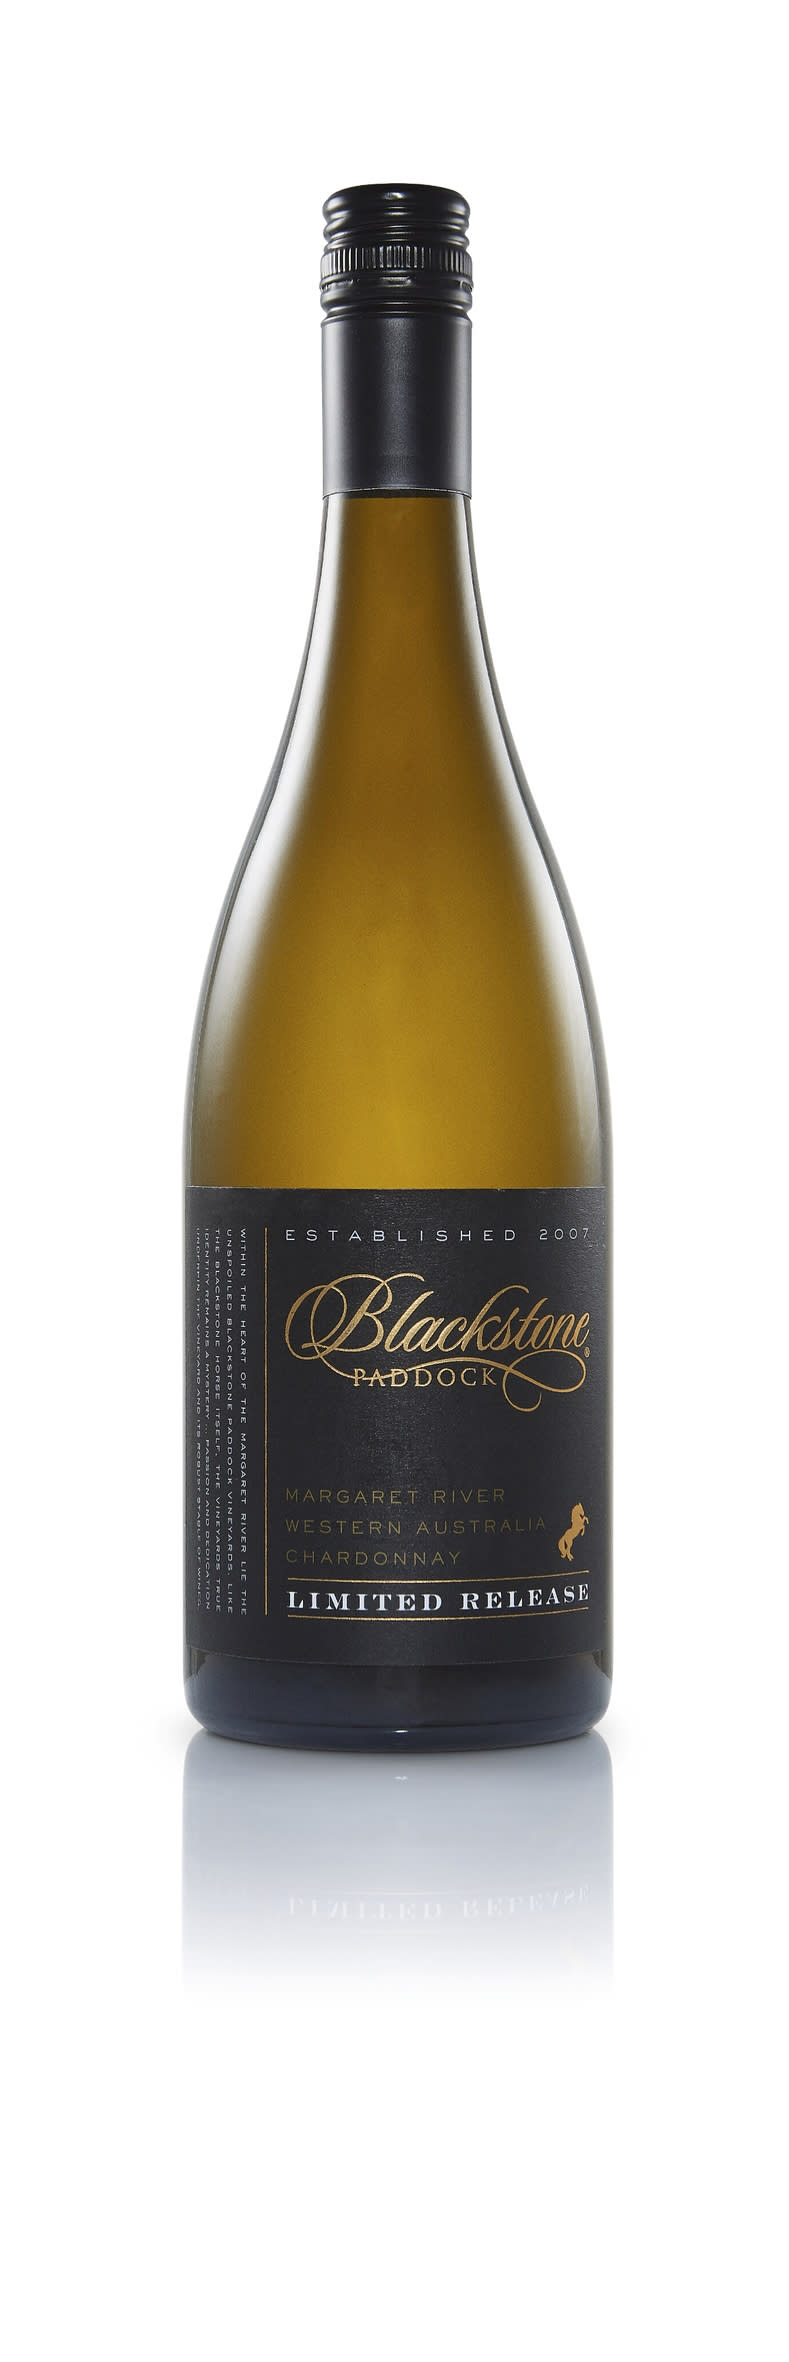 Aldi's award-winning Blackstone Paddock Margaret River Chardonnay 2019 costs just $16.99. Photo: Aldi (supplied).